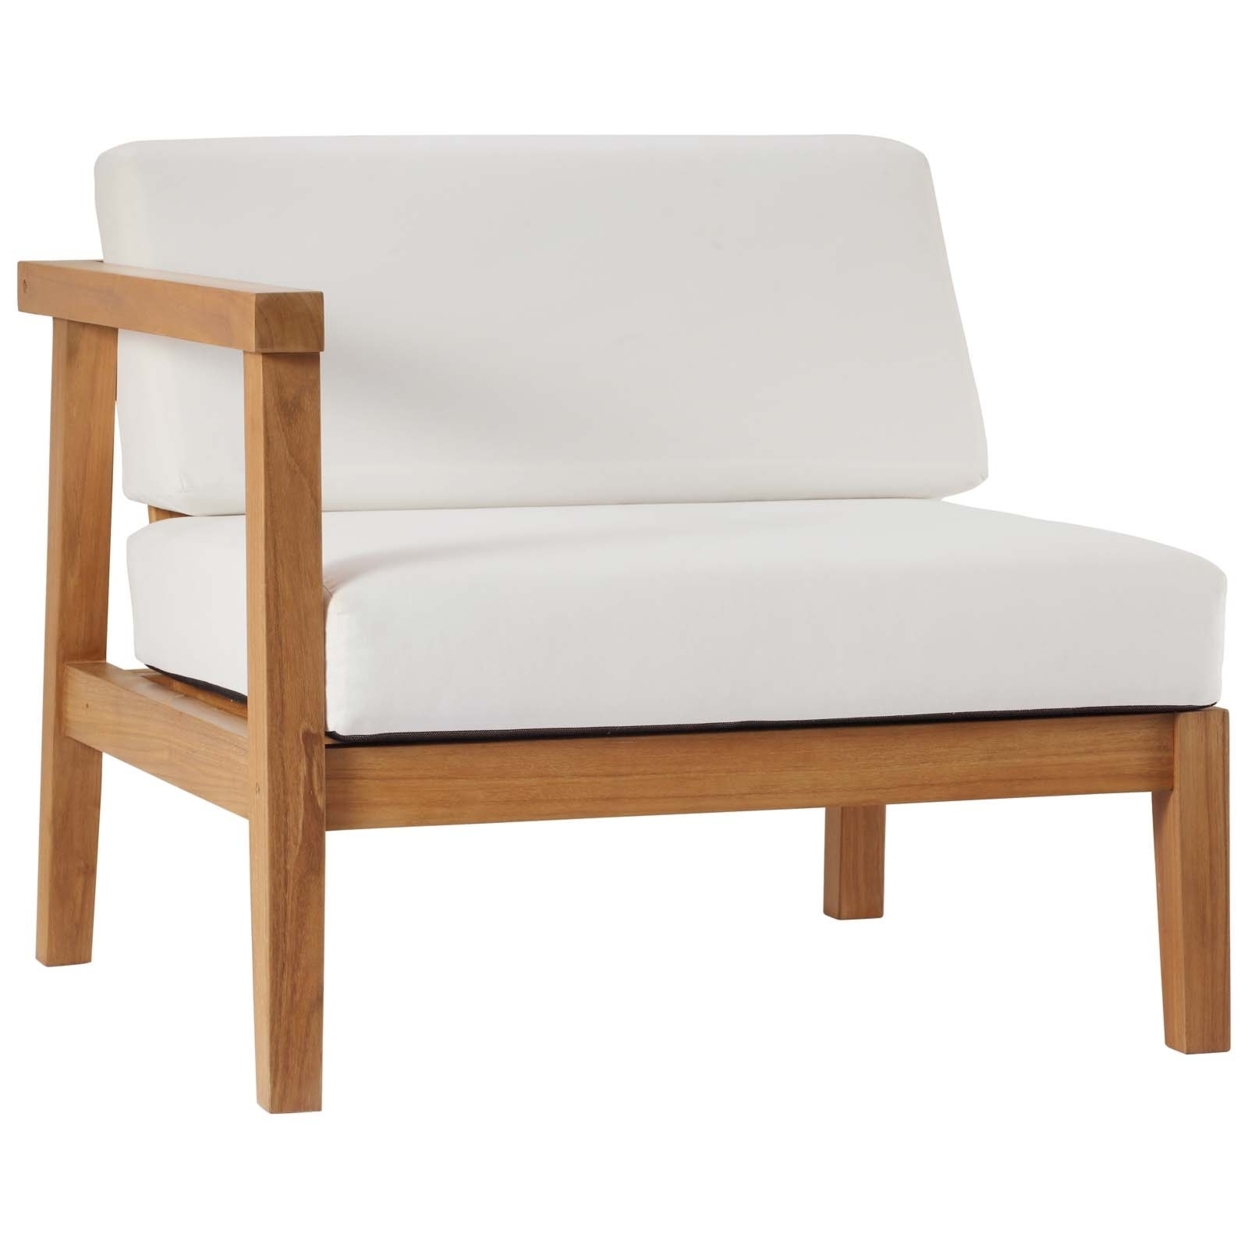 Bayport Outdoor Patio Teak Wood Left-Arm Chair, Natural White